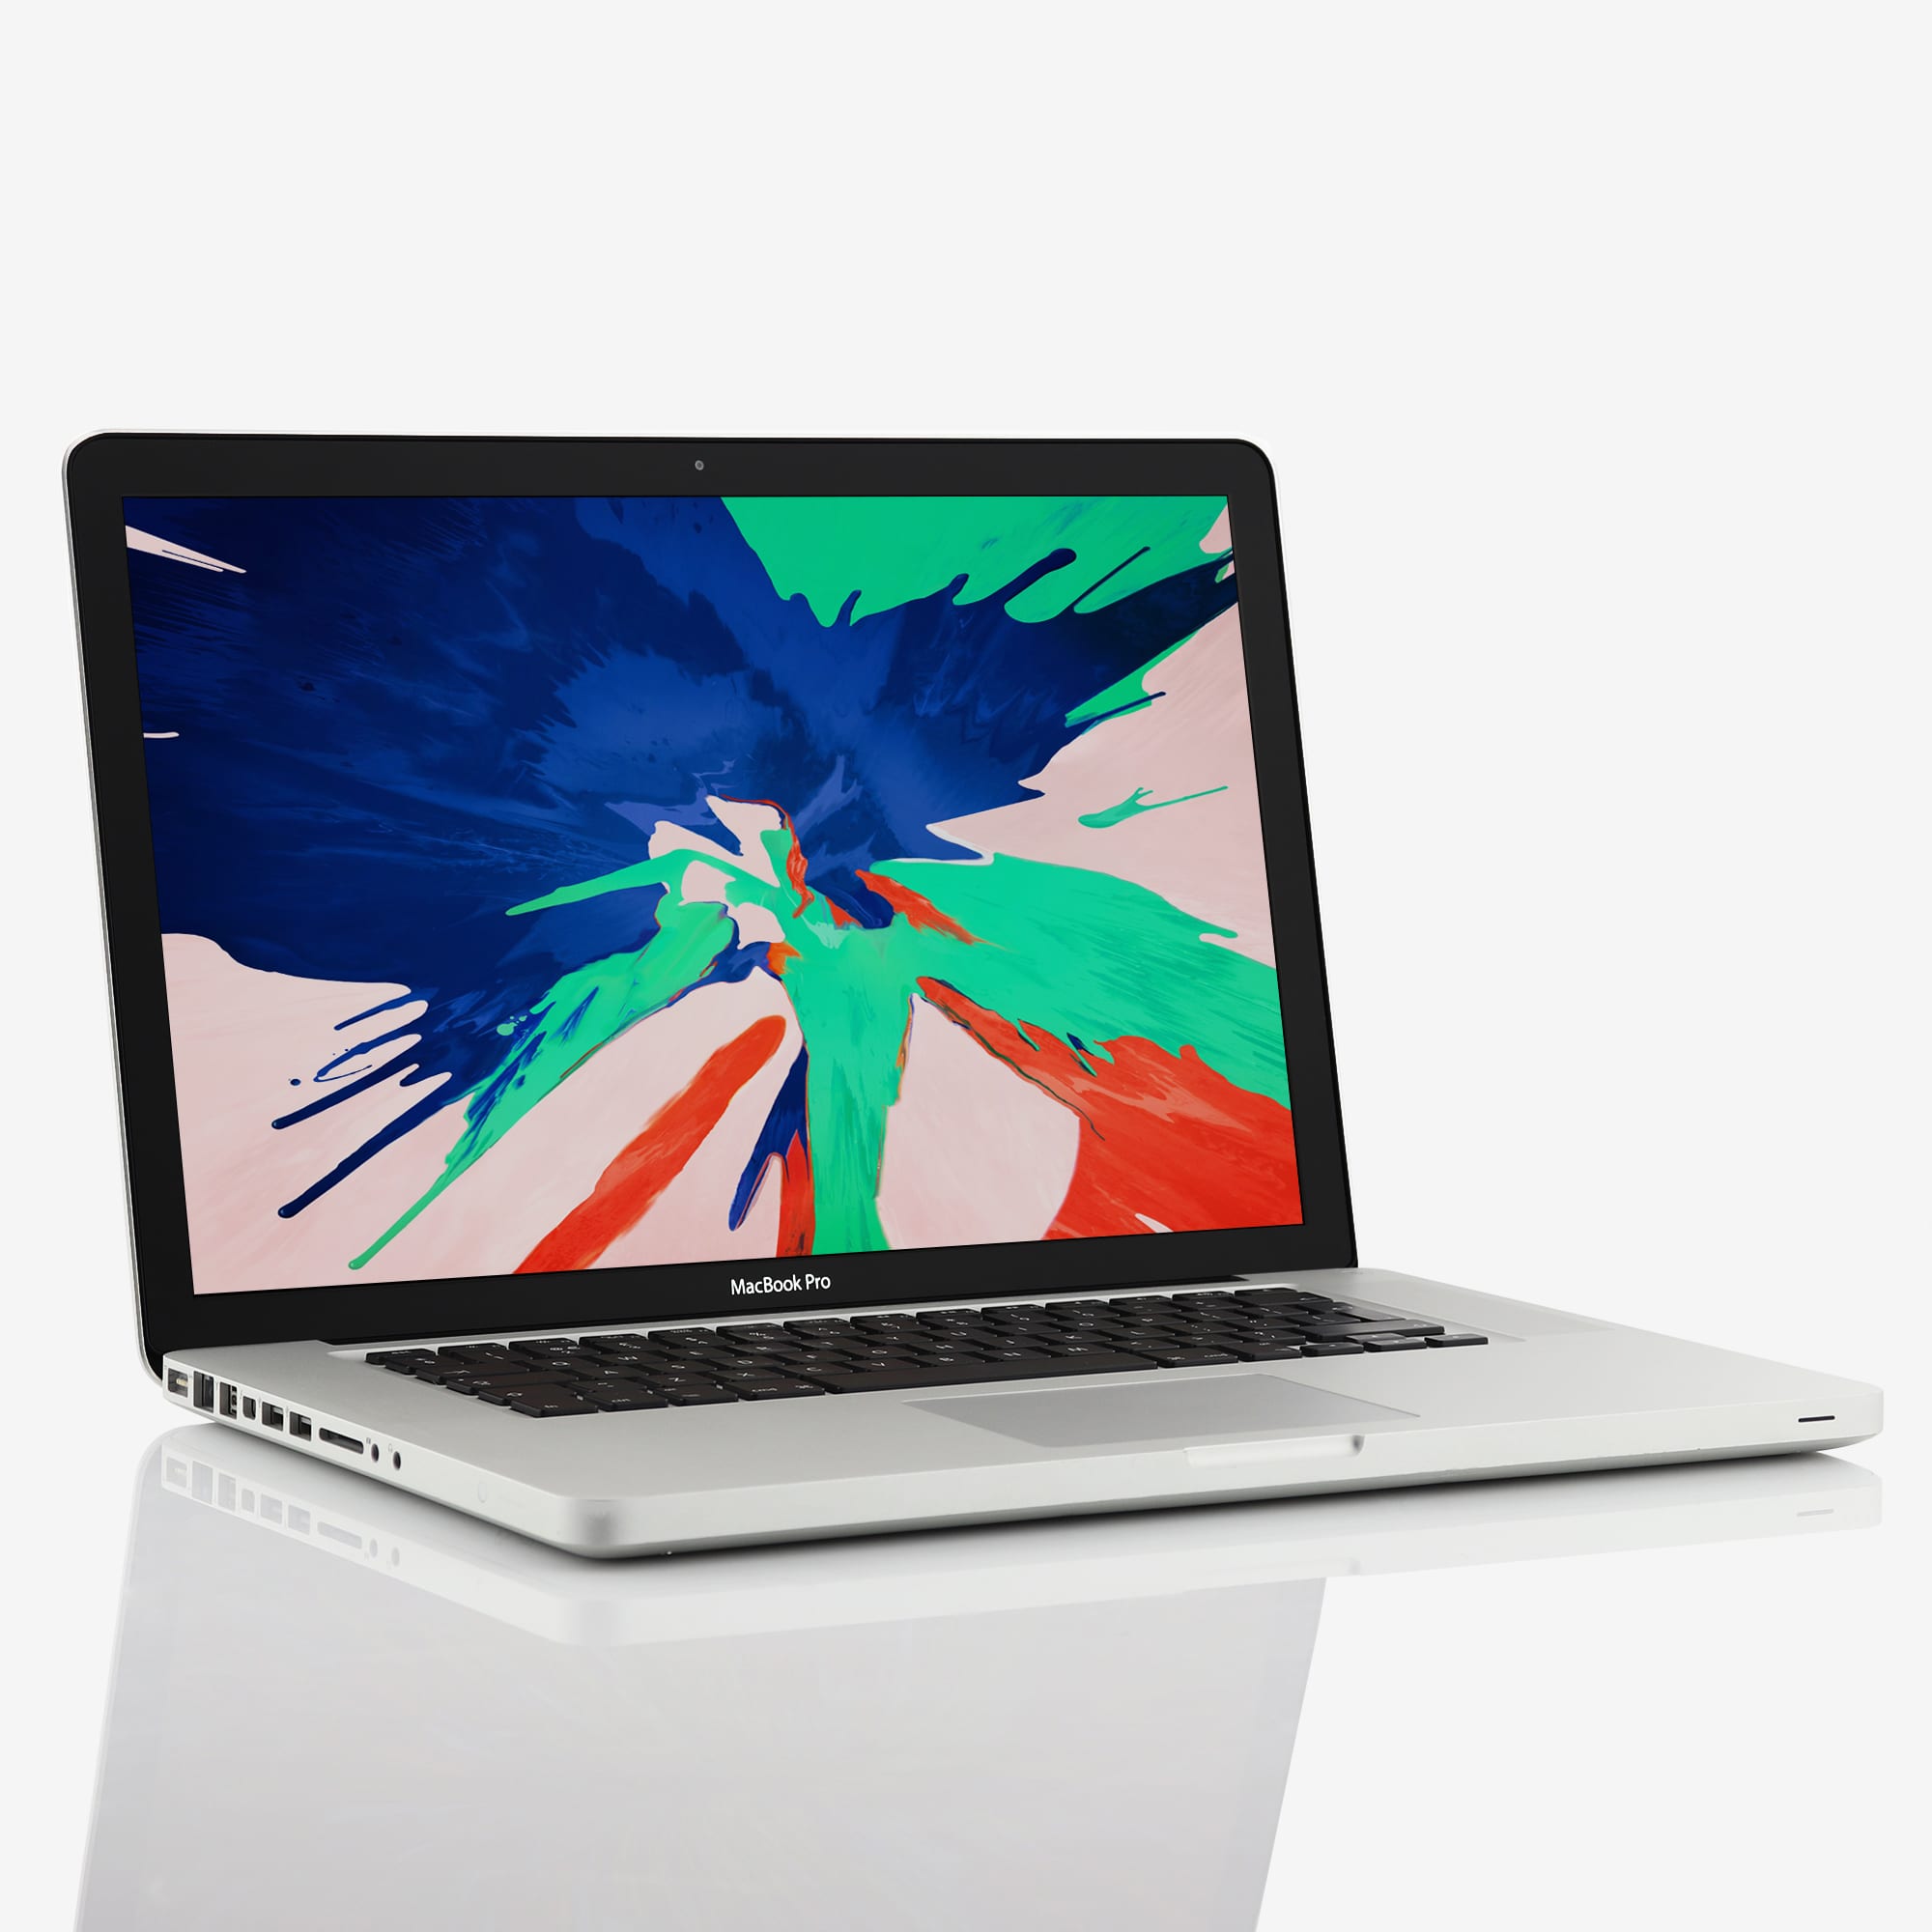 1 x Apple MacBook Pro 15 Inch Intel Core i7 2.40 GHz (2011)